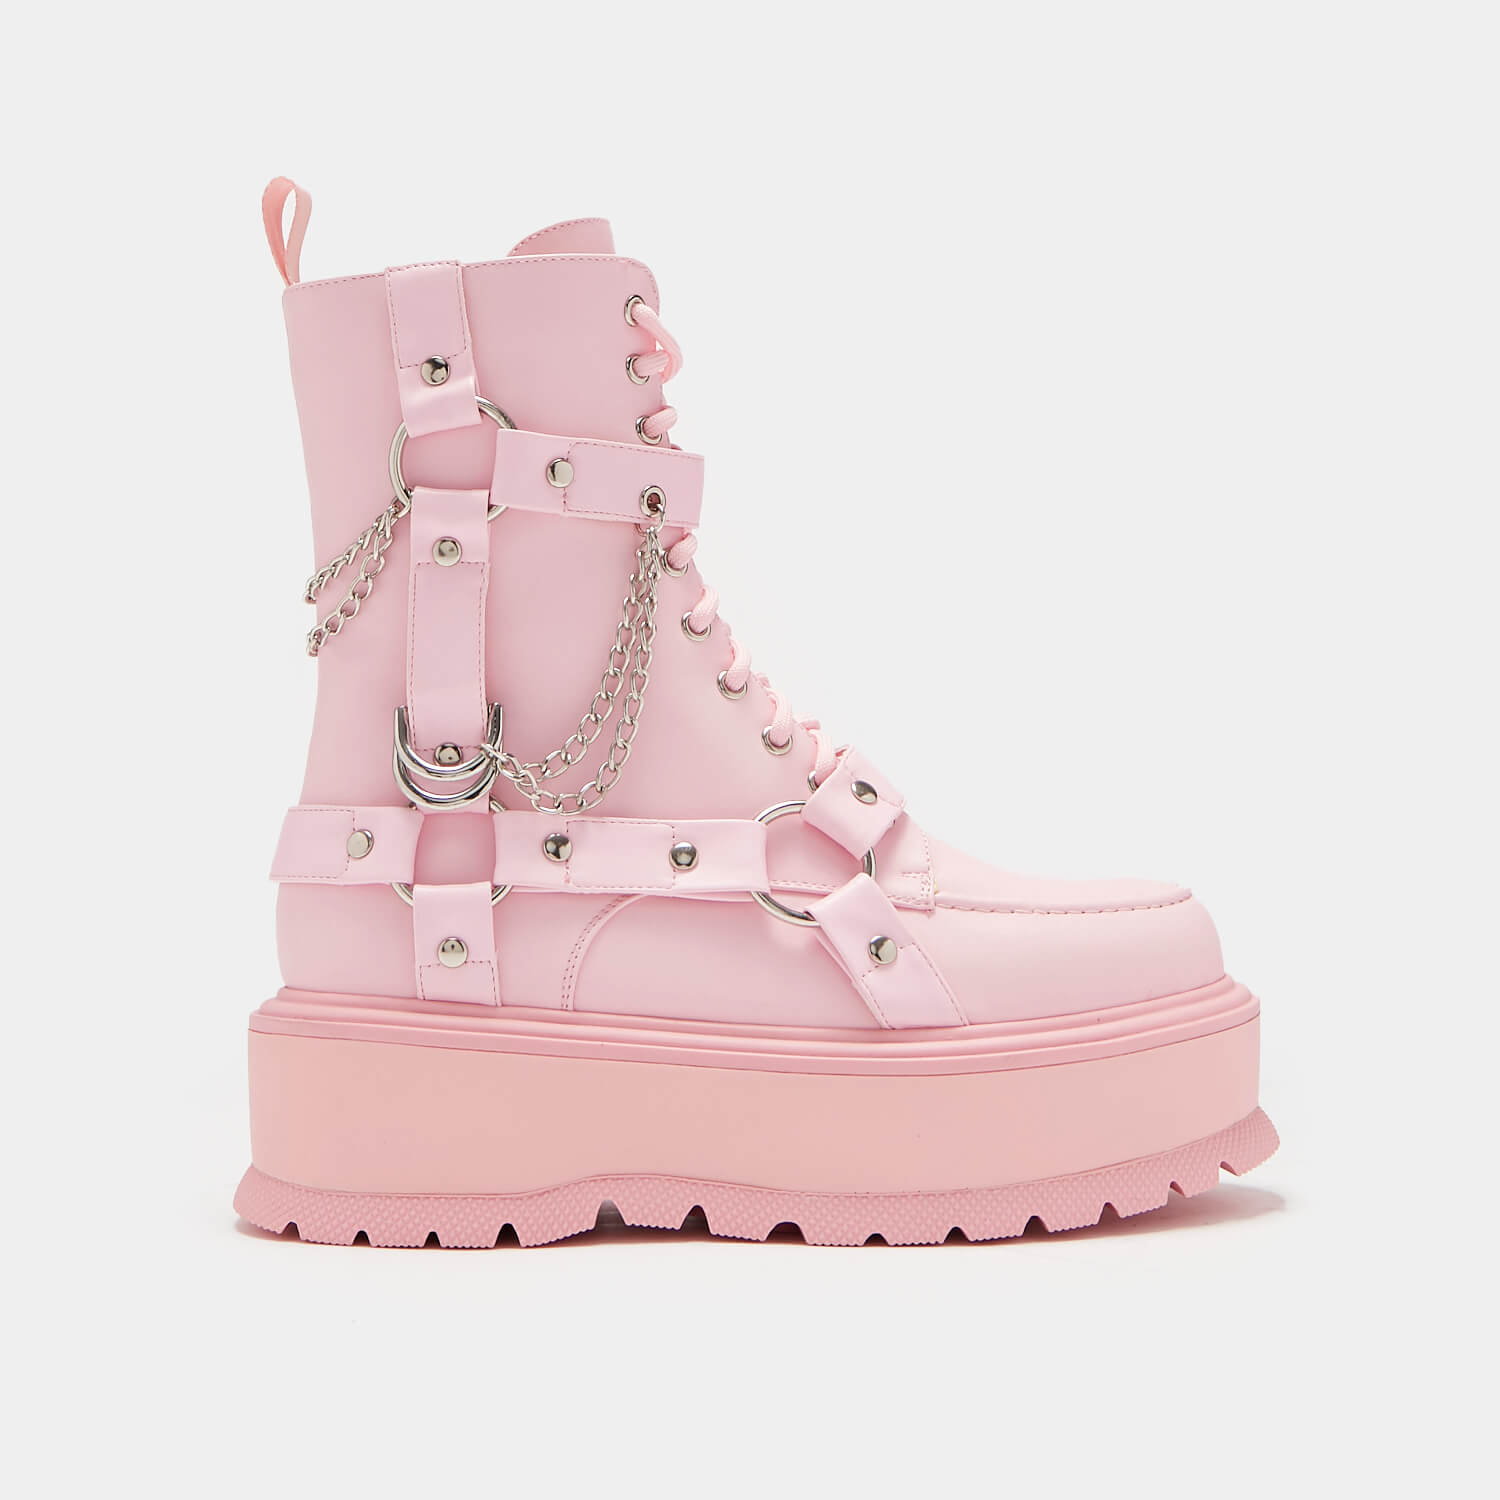 Yami Pastel Pink Platform Boots - Ankle Boots - KOI Footwear - Pink - Side View